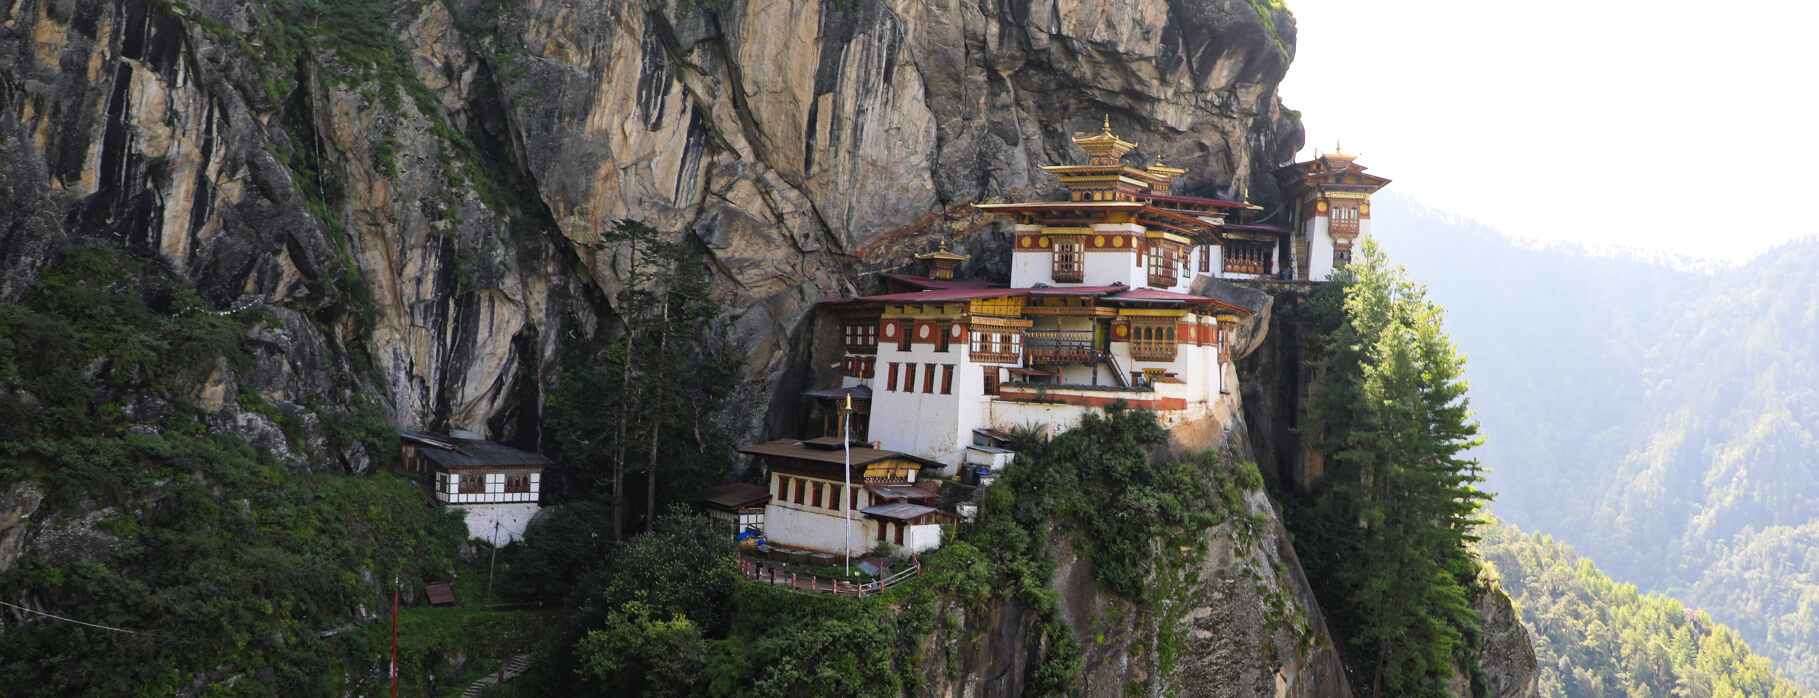 Bhutan Temple & Monastry Tours